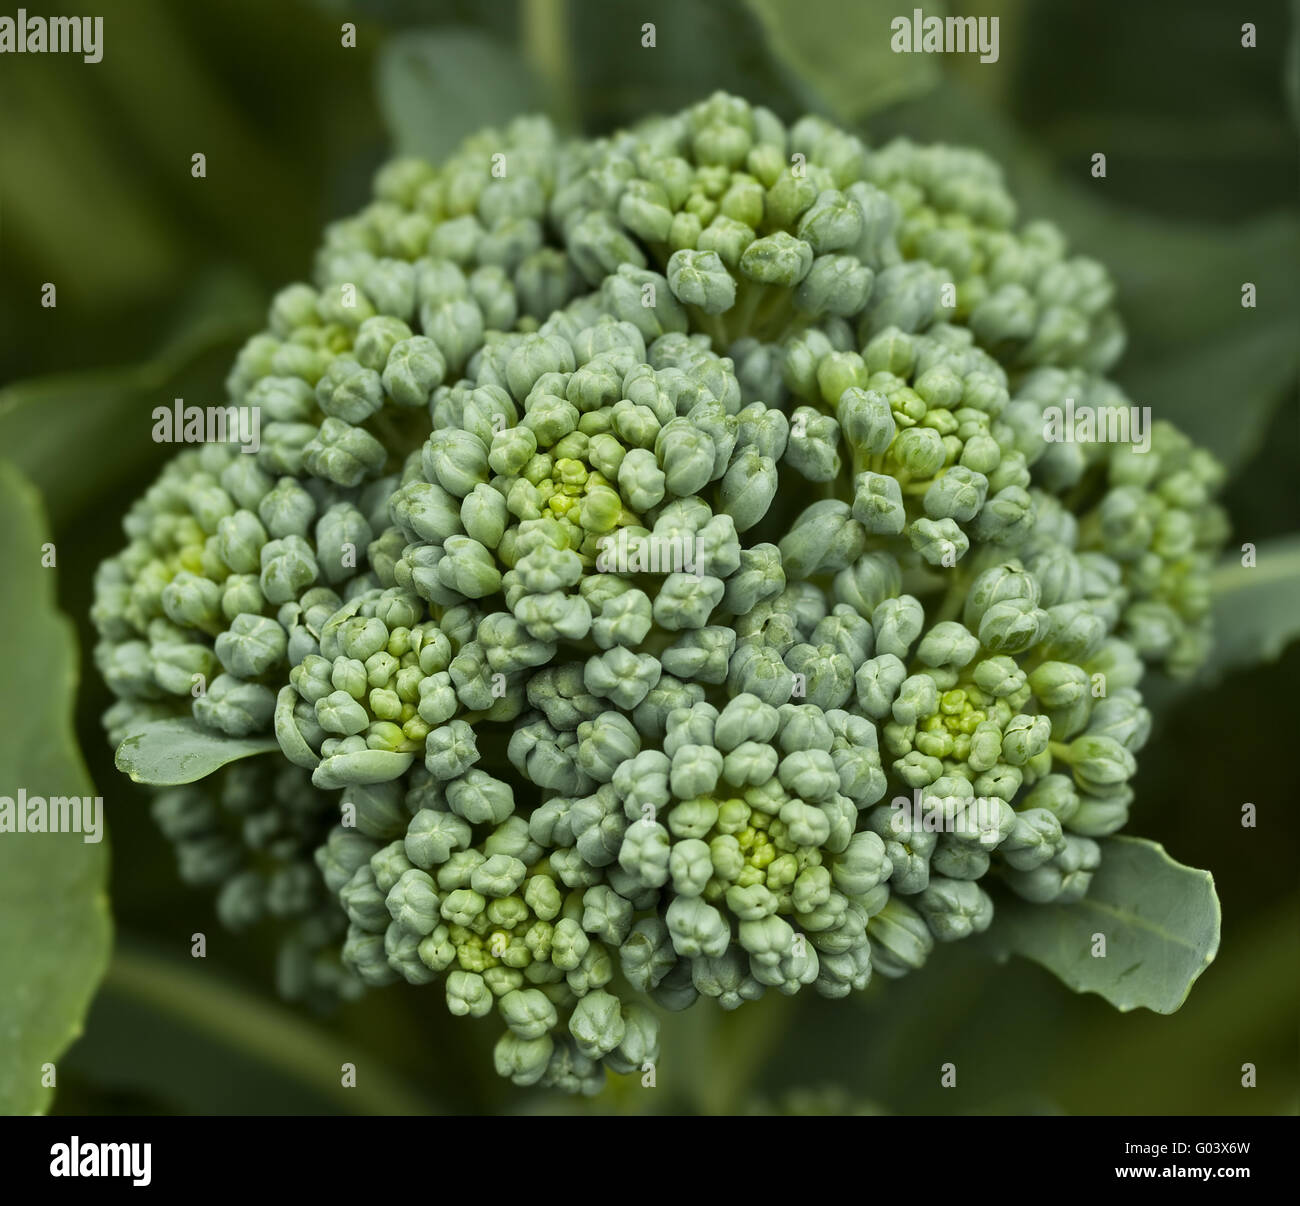 Fresche verdure organiche broccoli homegrown in giardino Foto Stock